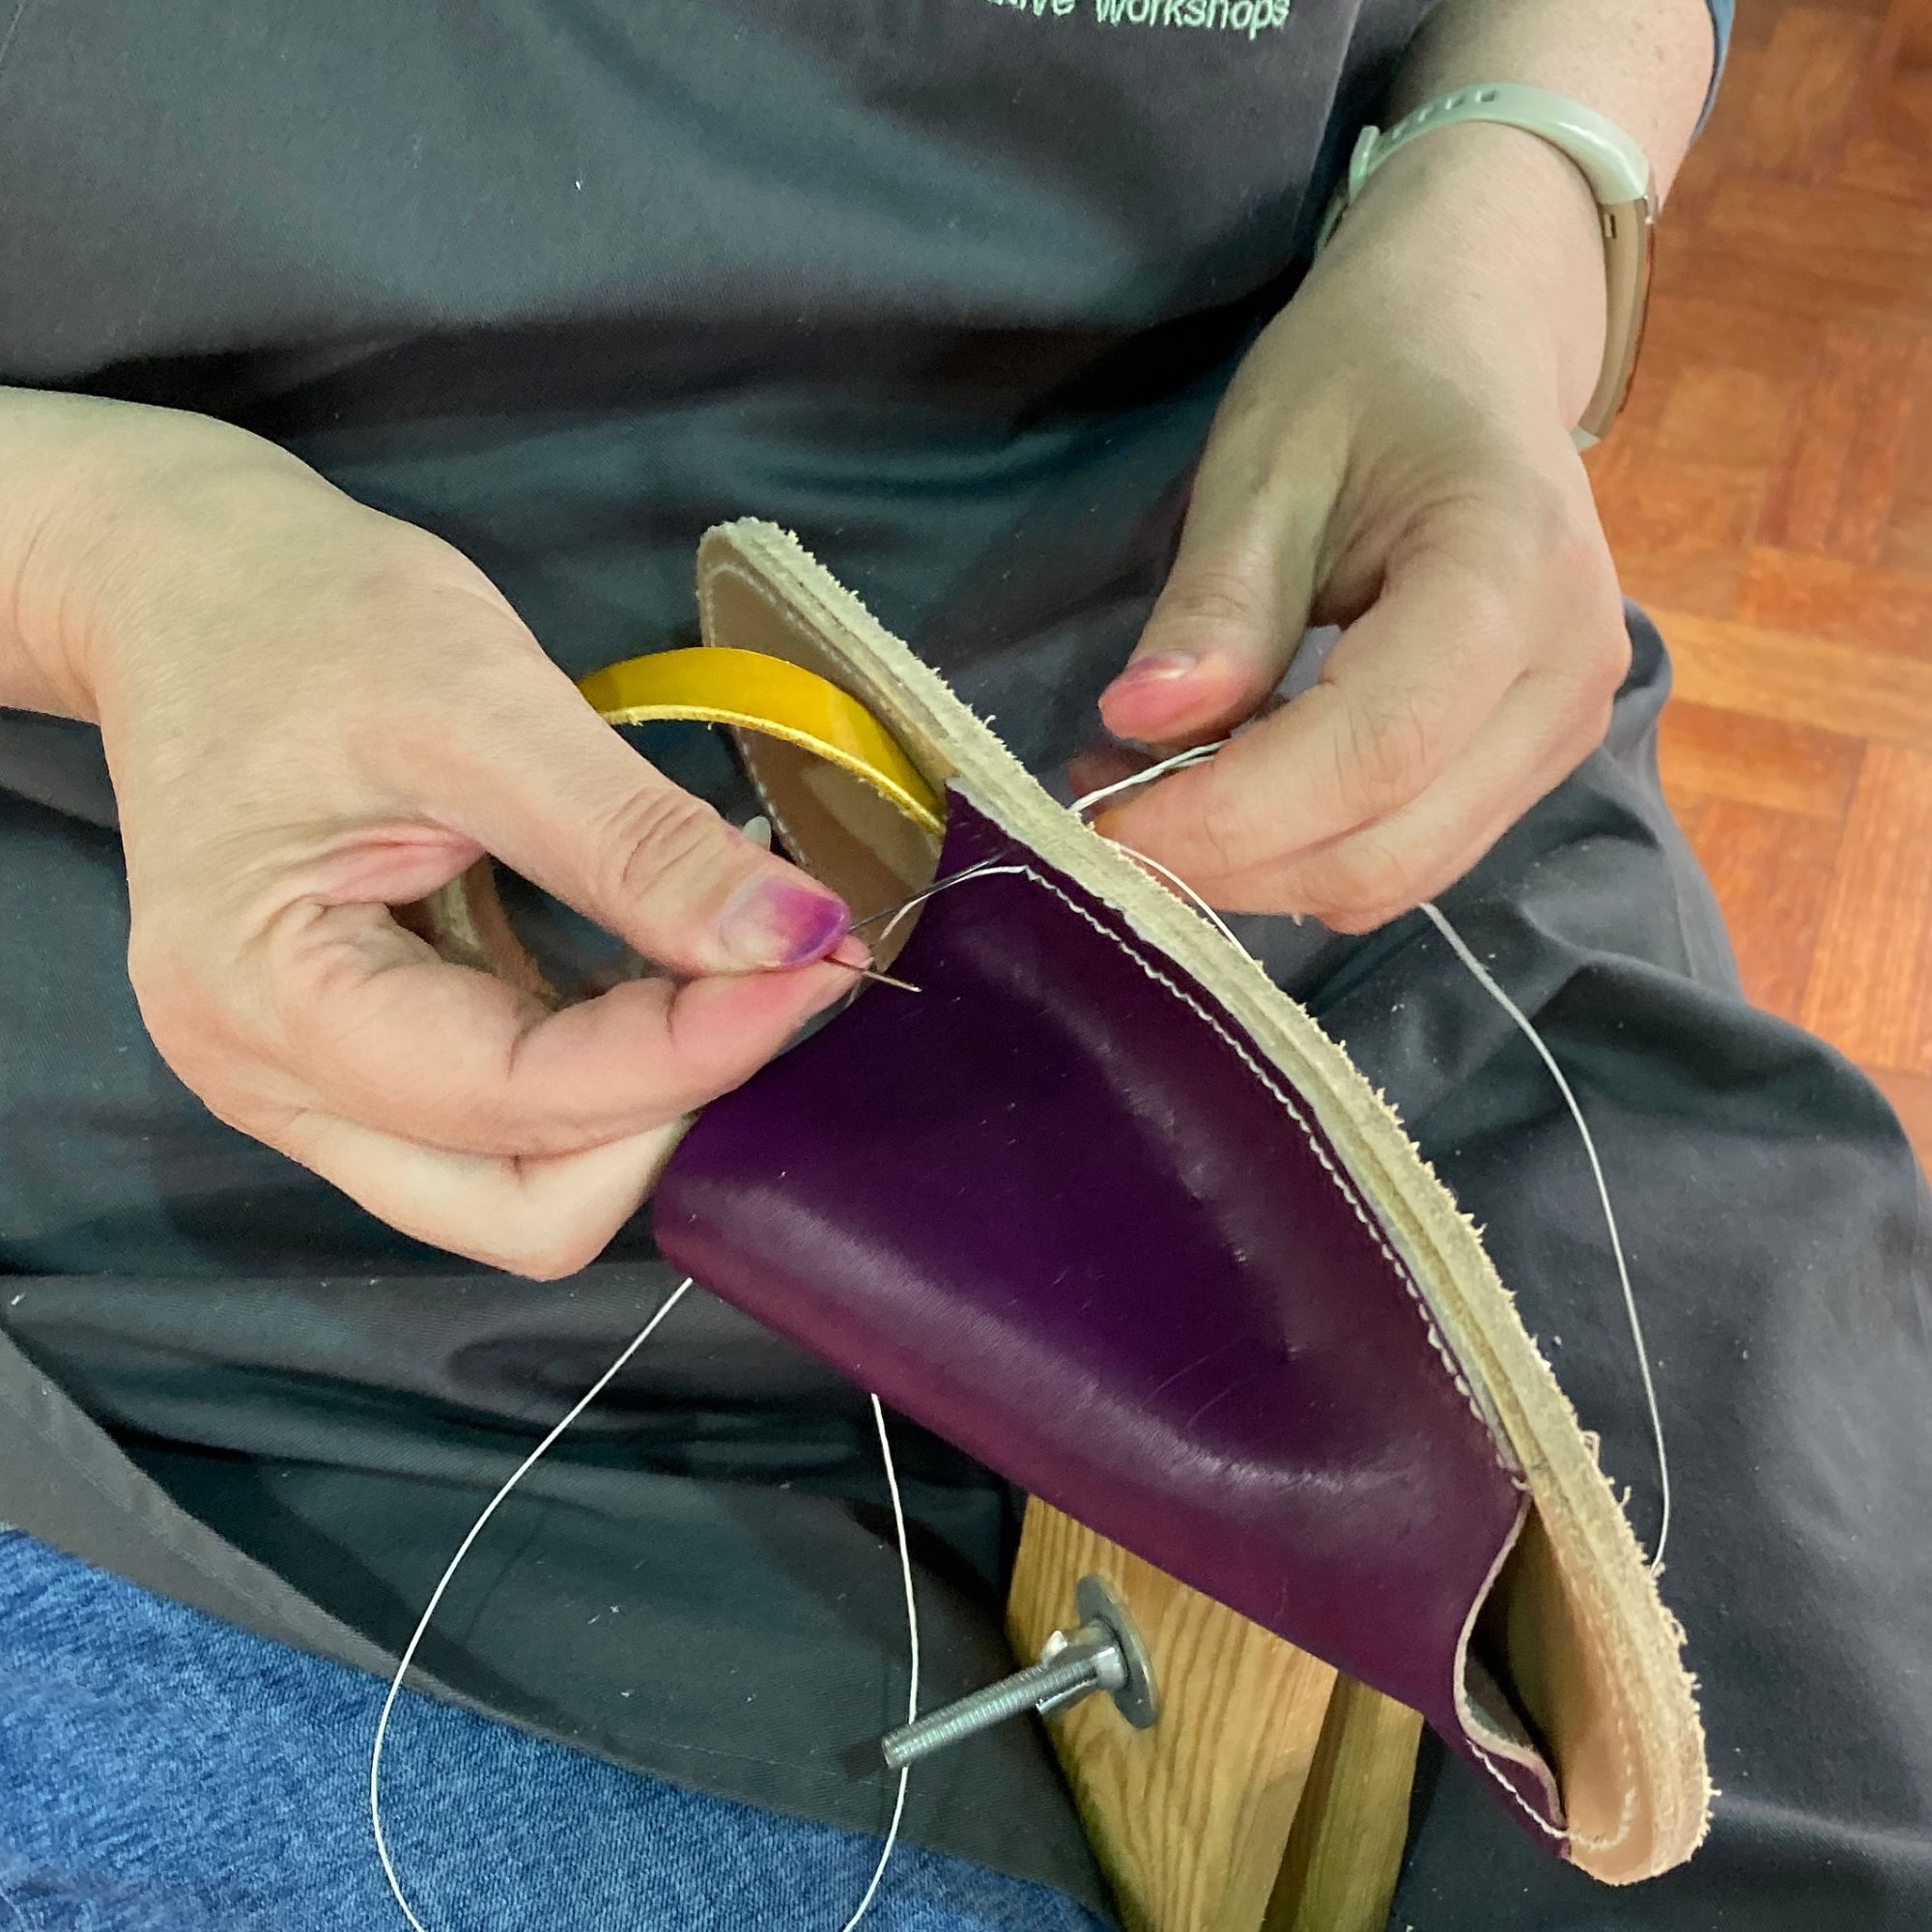 Leather Sandals Workshop - Stitching